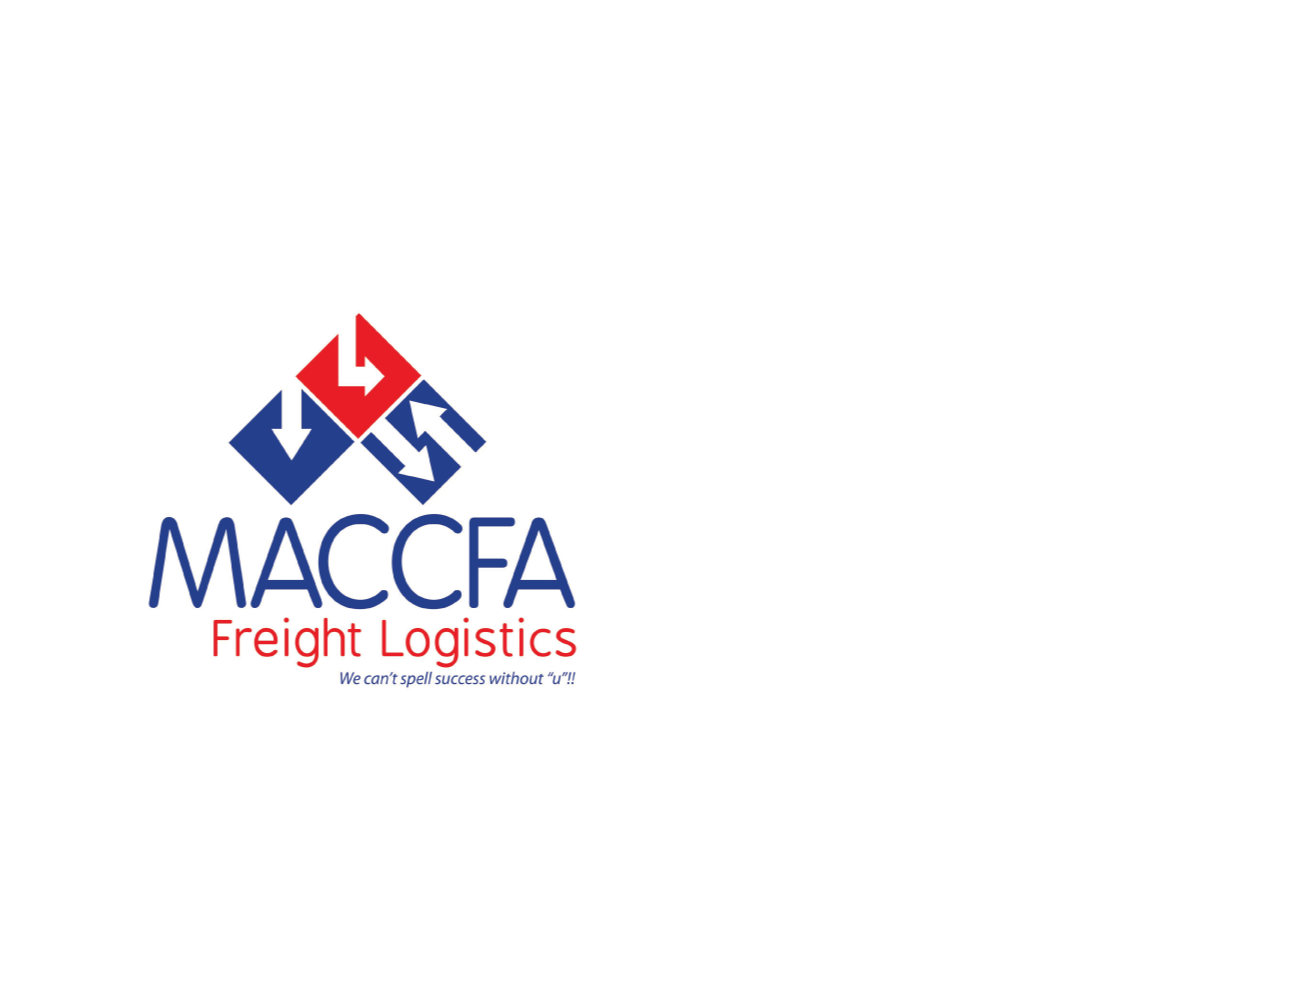 Maccfa Freight Logistics logo